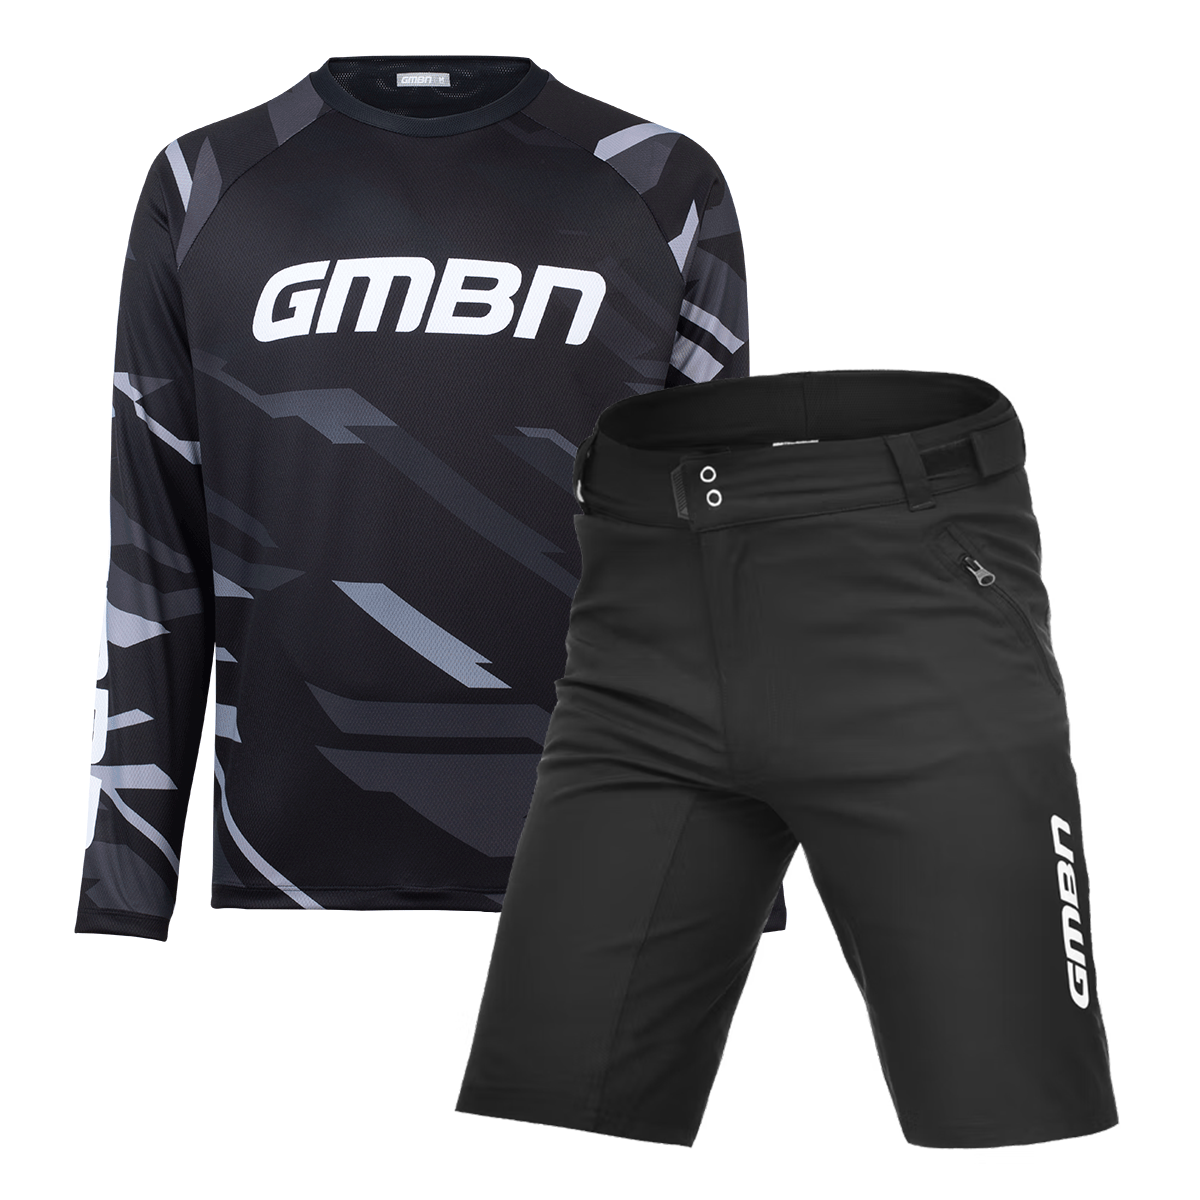 GMBN Slickrock Jersey & MTB Shorts Bundle